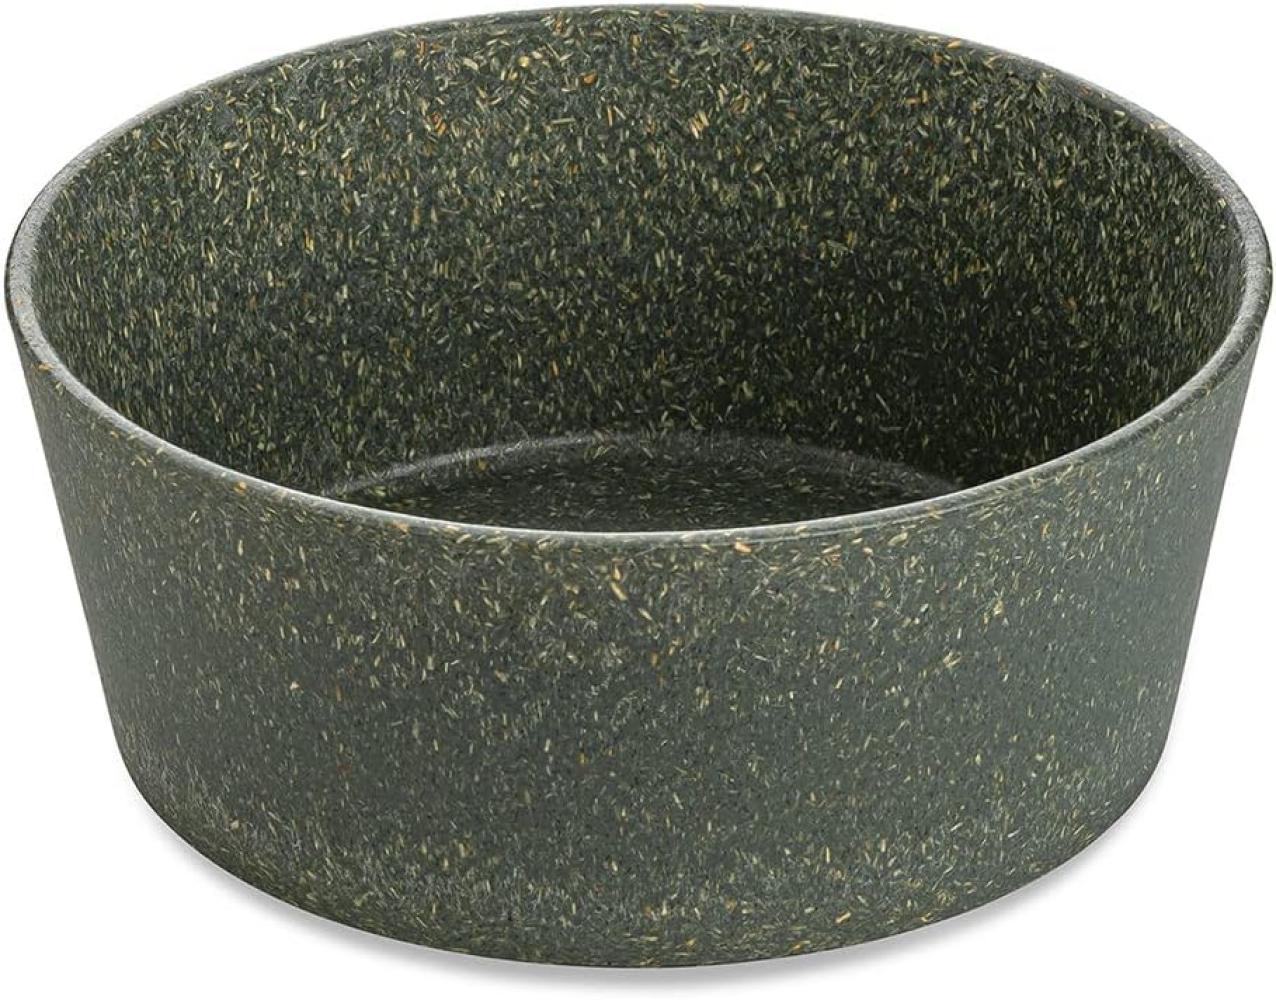 Koziol Schalen 2er-Set Connect Bowl, Schüsseln, Kunststoff-Holz-Mix, Nature Ash Grey, 400 ml, 7102701 Bild 1